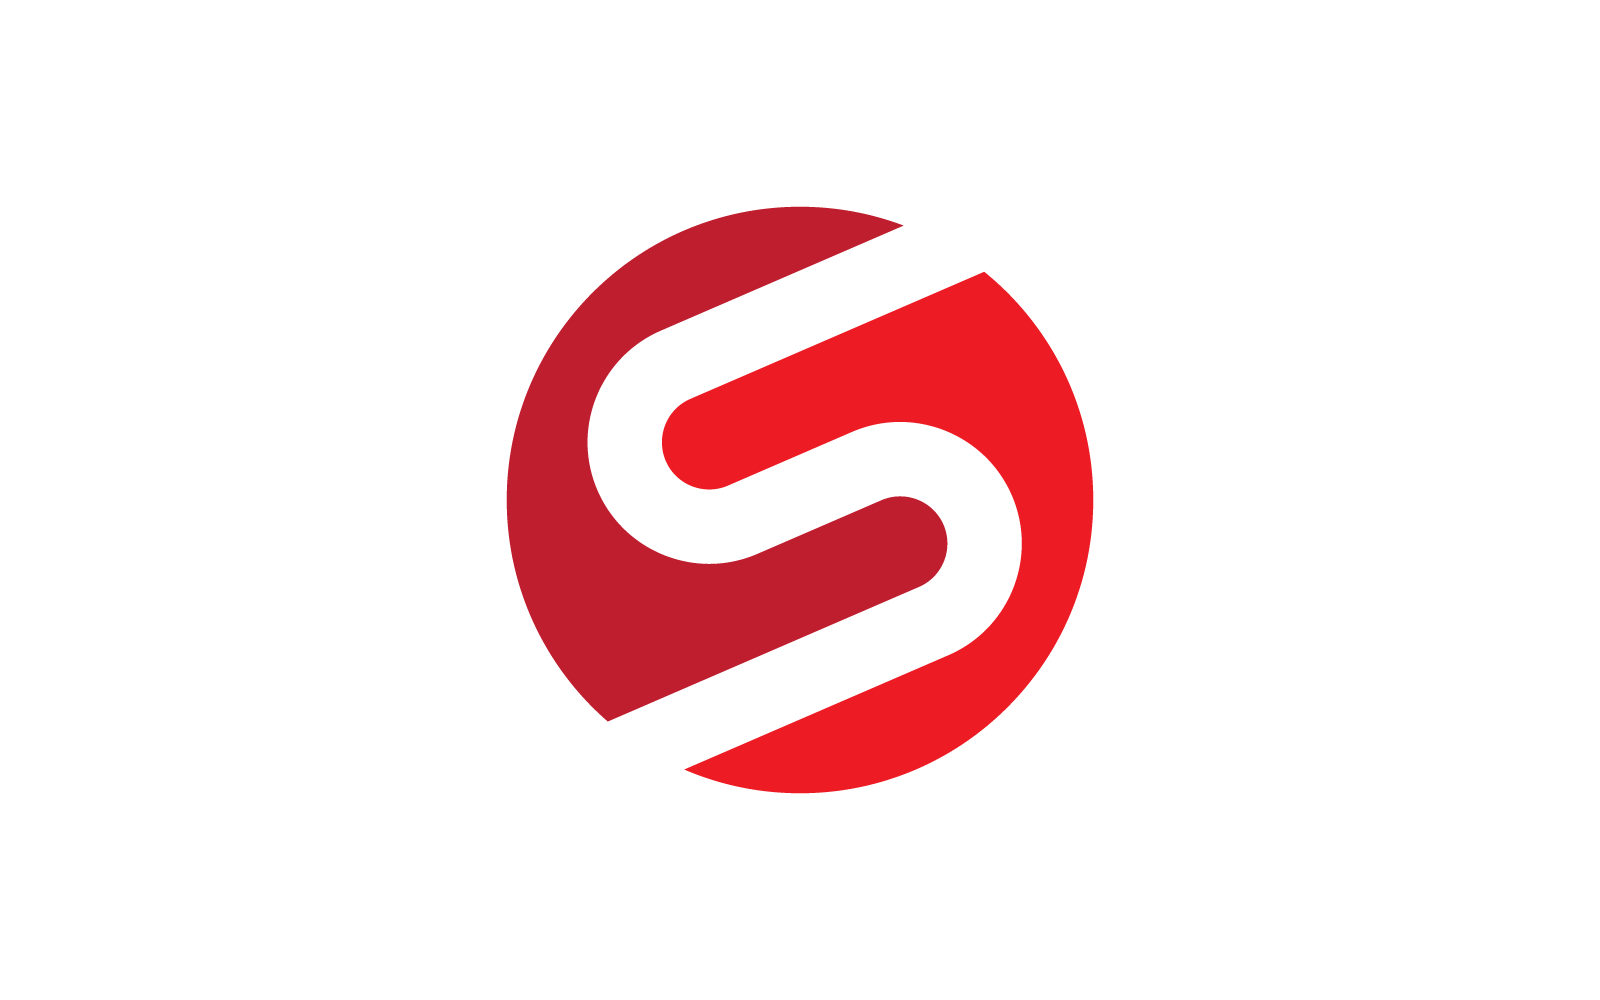 S letter logo illustration icon flat design vector Logo Template